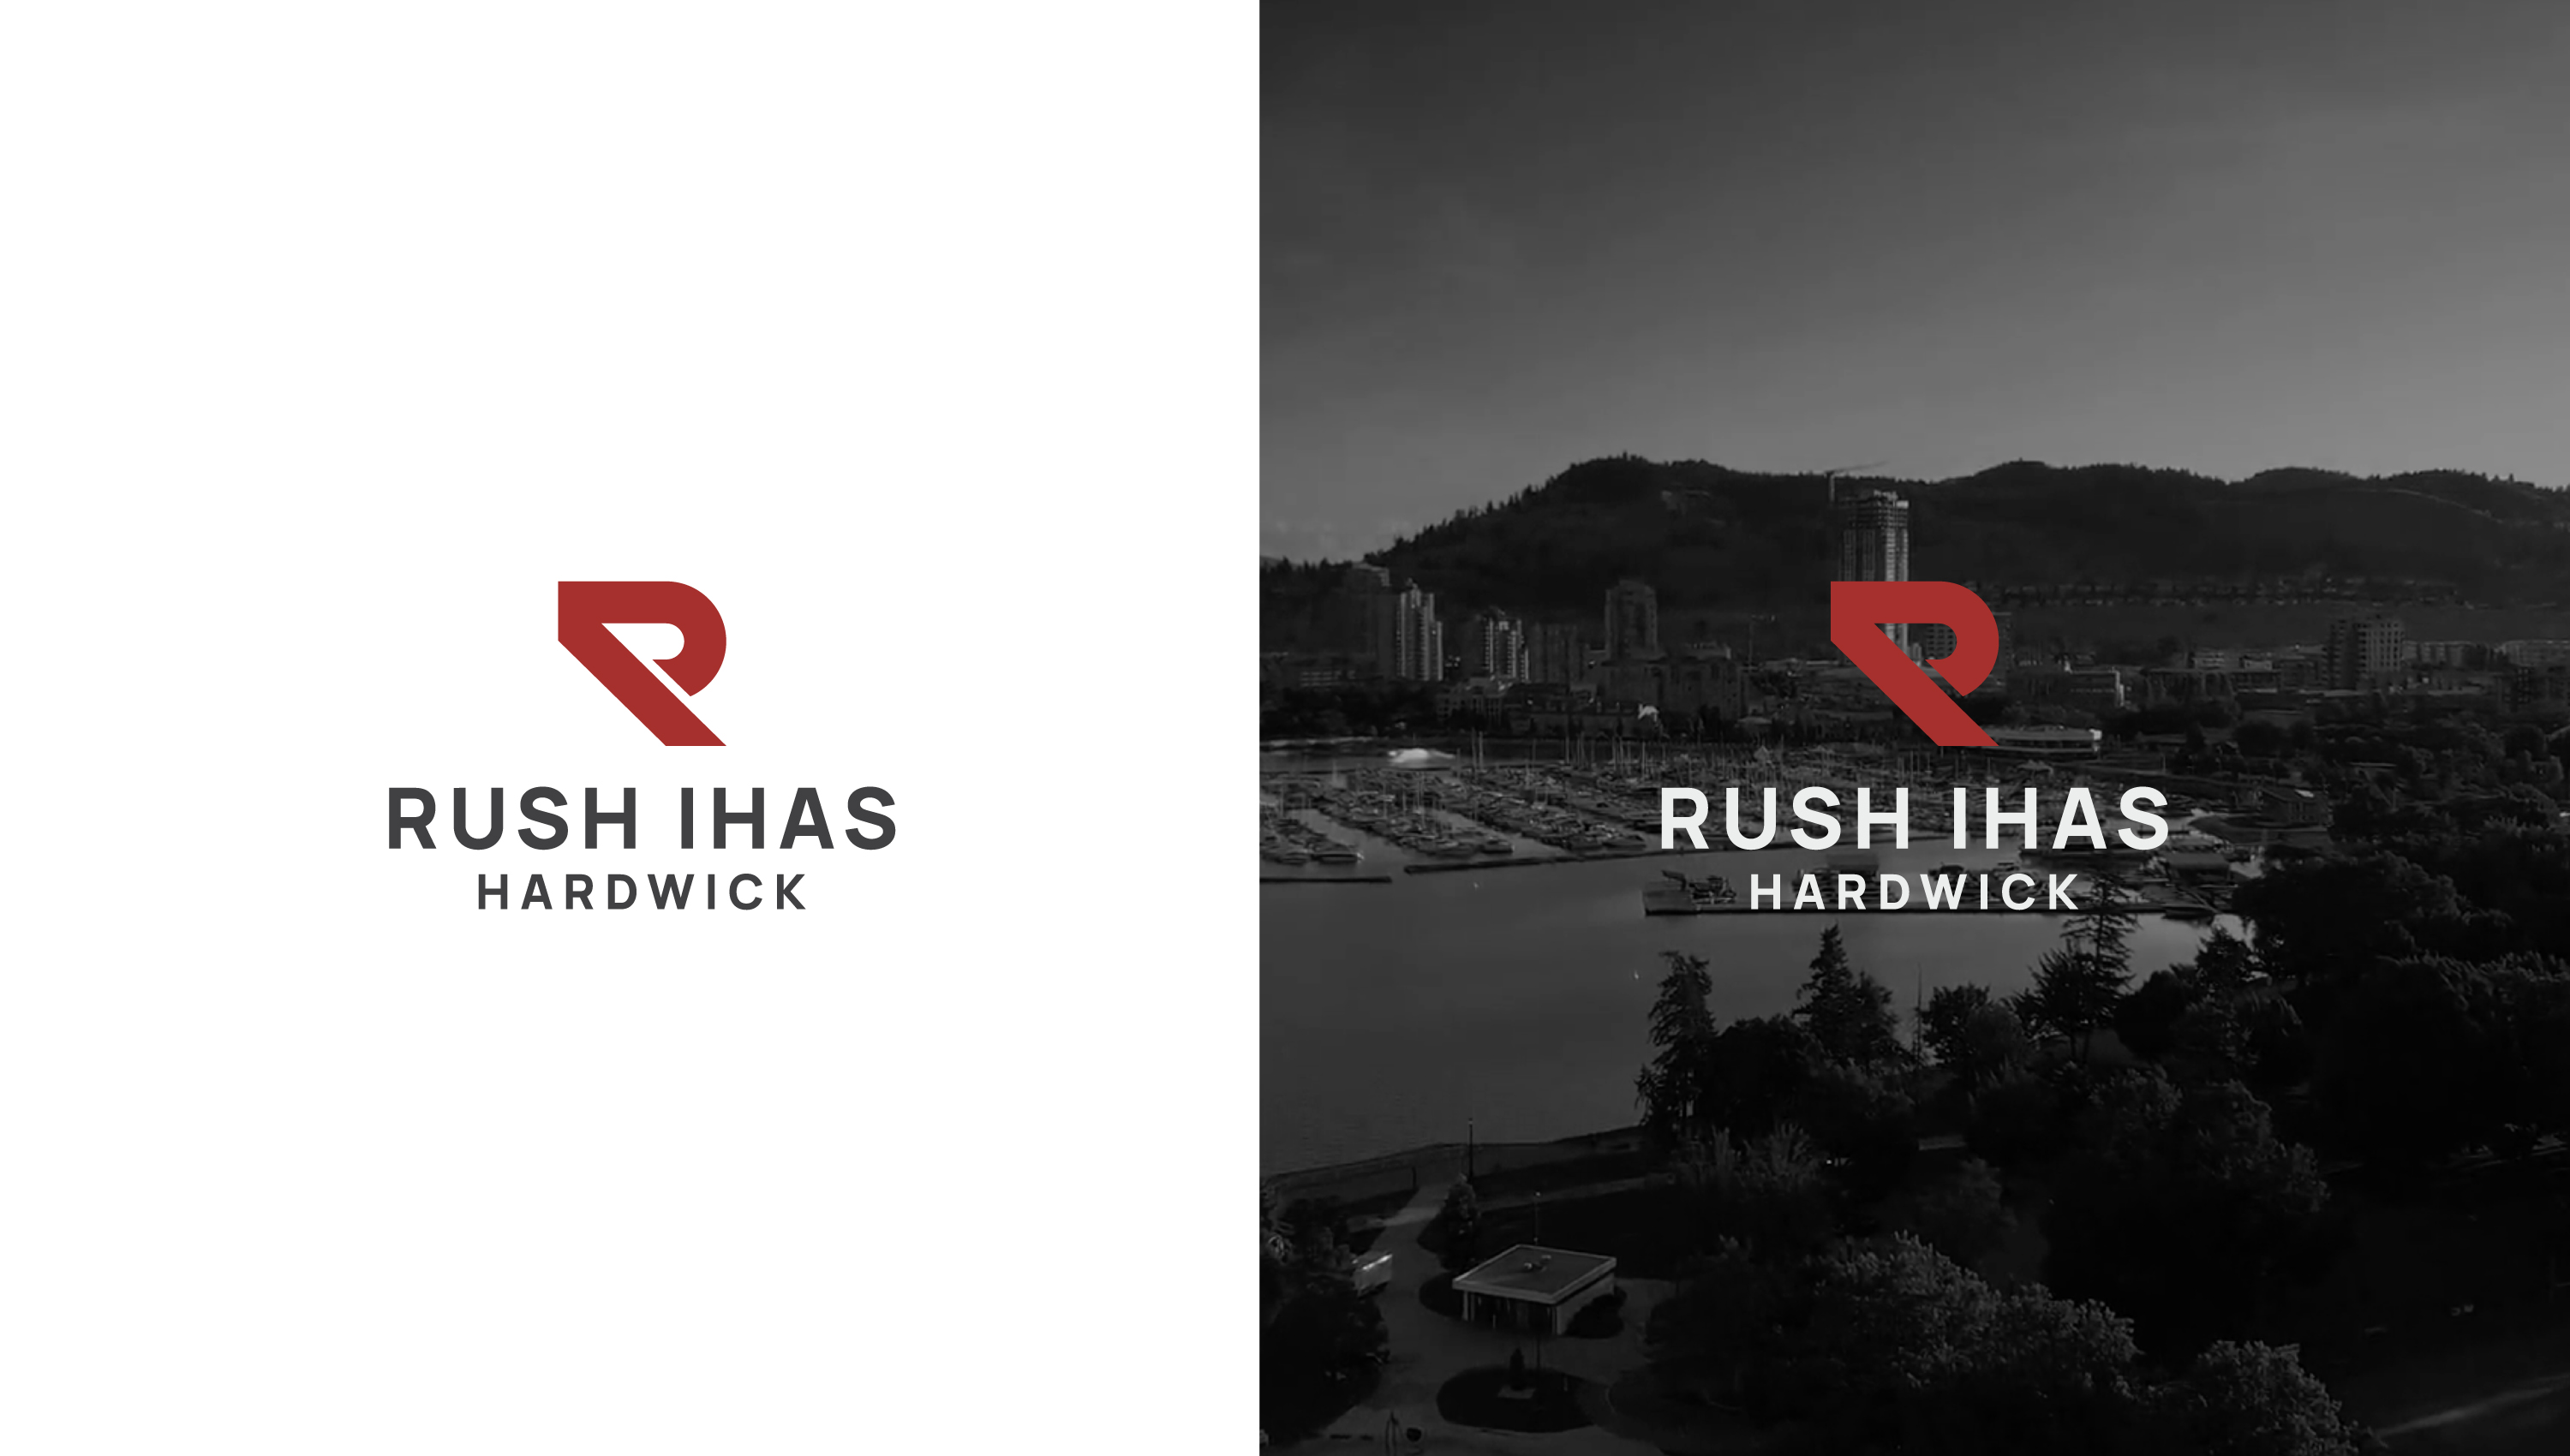 Rush Ihas branding showing logo redesigned on dark and light background